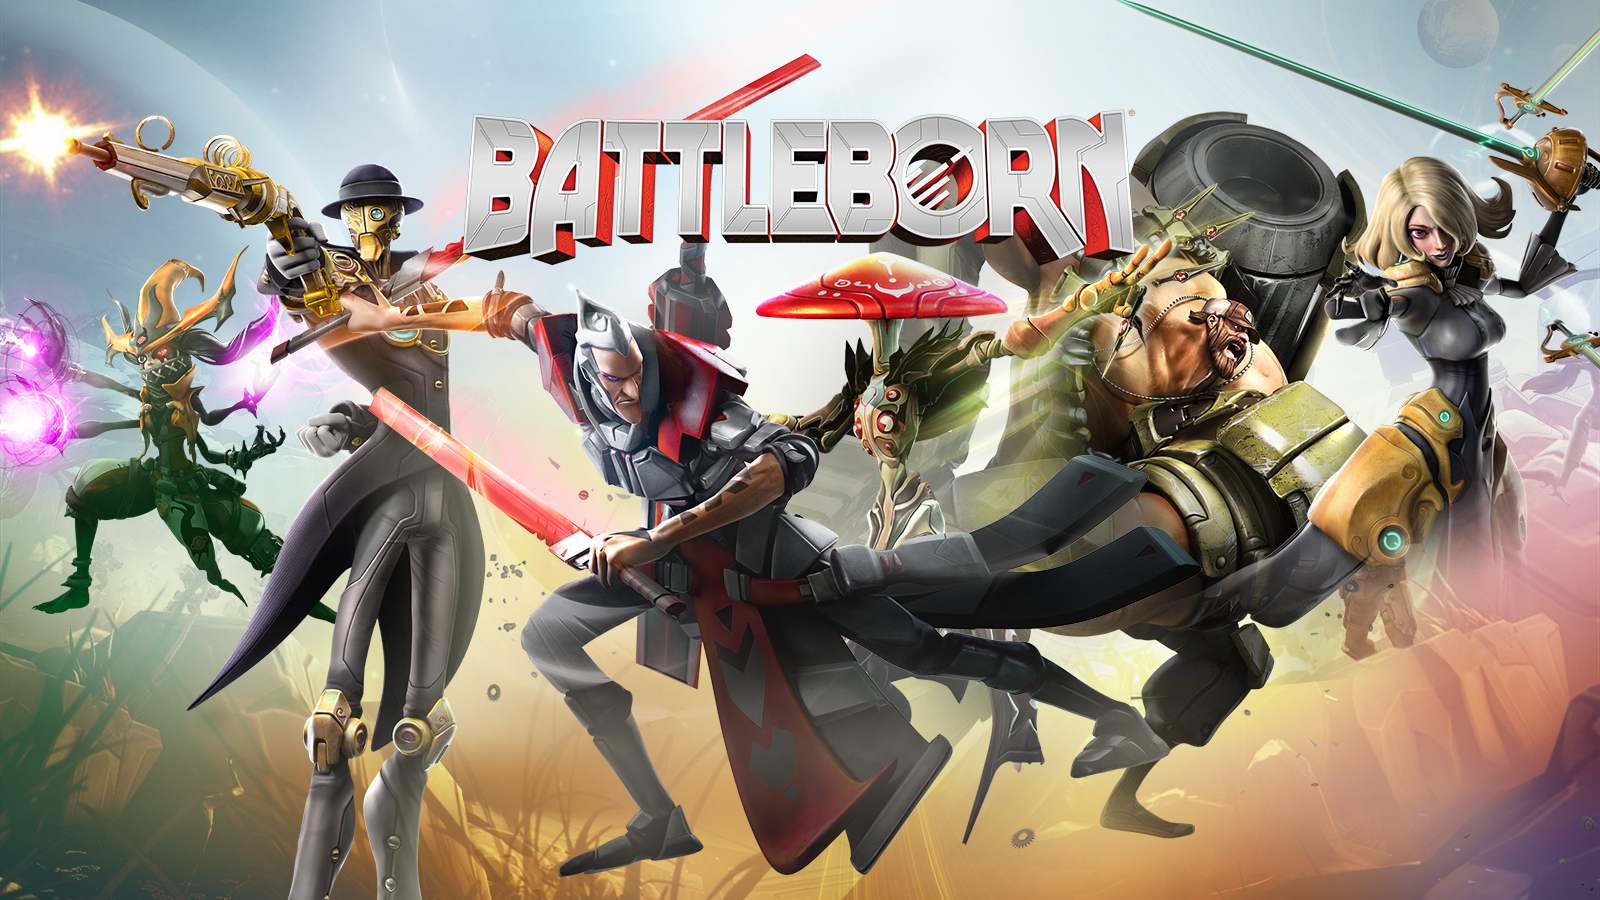 Amazing Battleborn Pictures & Backgrounds